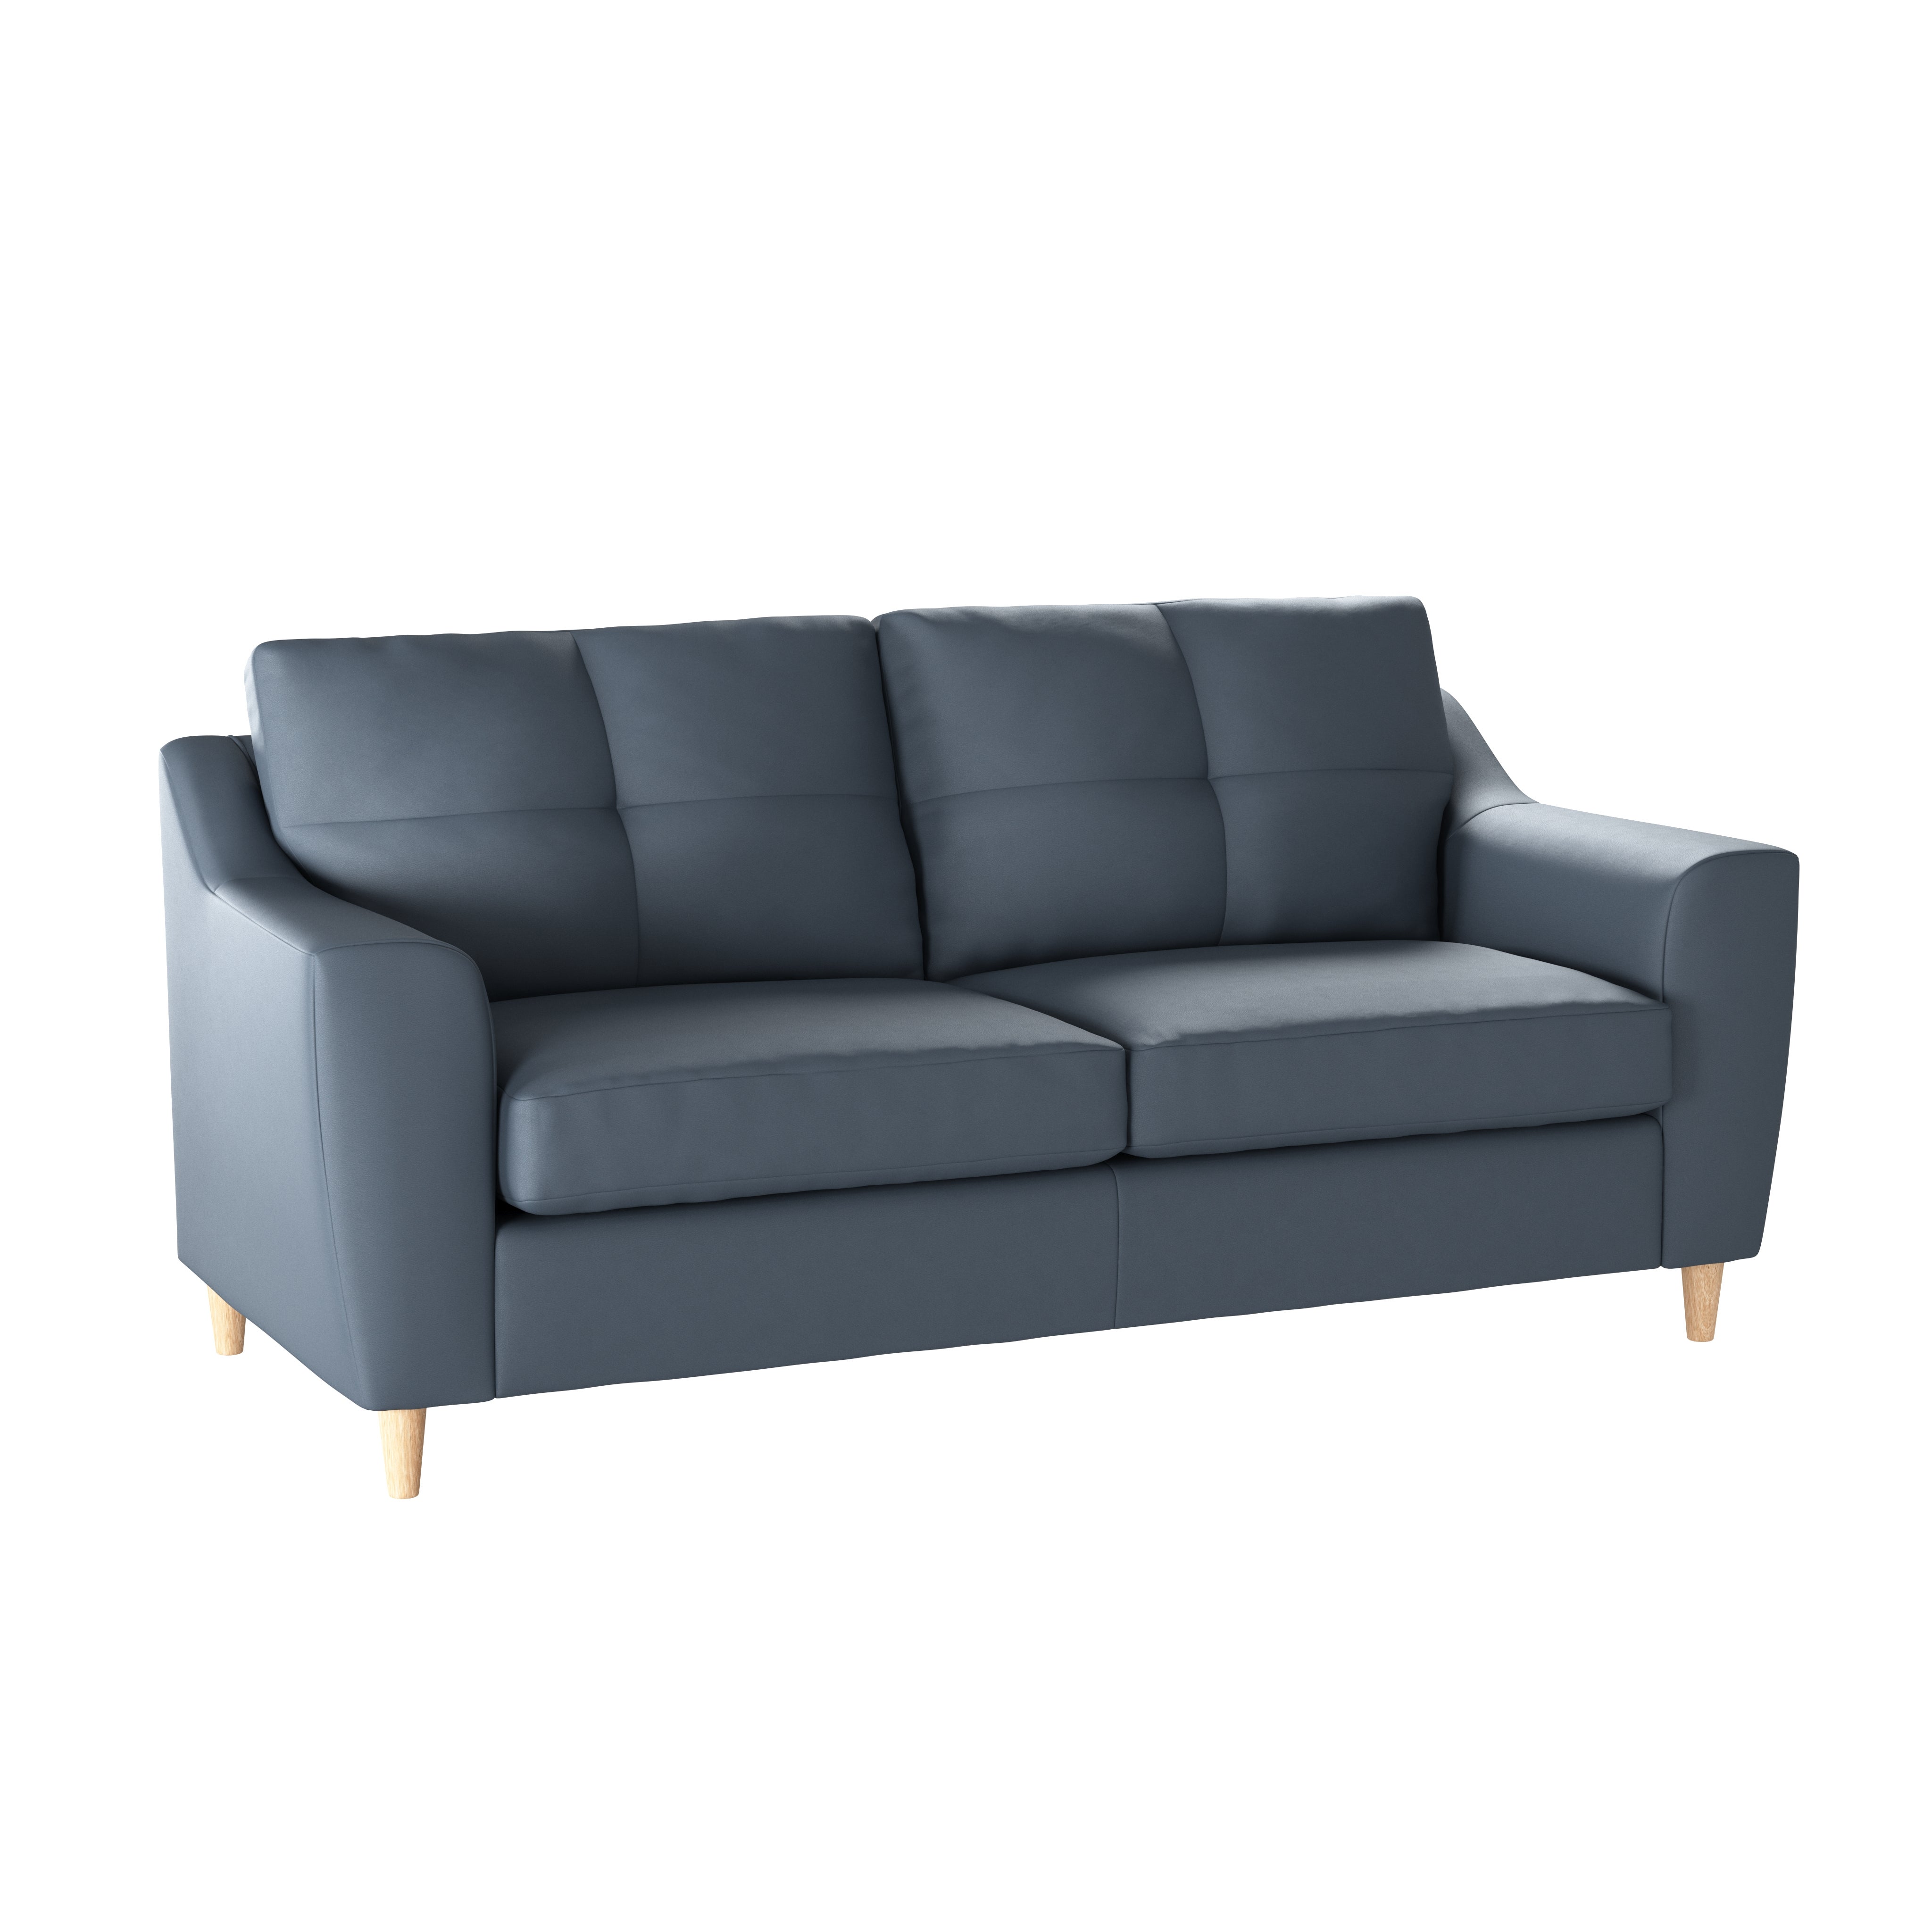 Baxter Kalman Navy Faux Leather 3 Seater Sofa | Dunelm